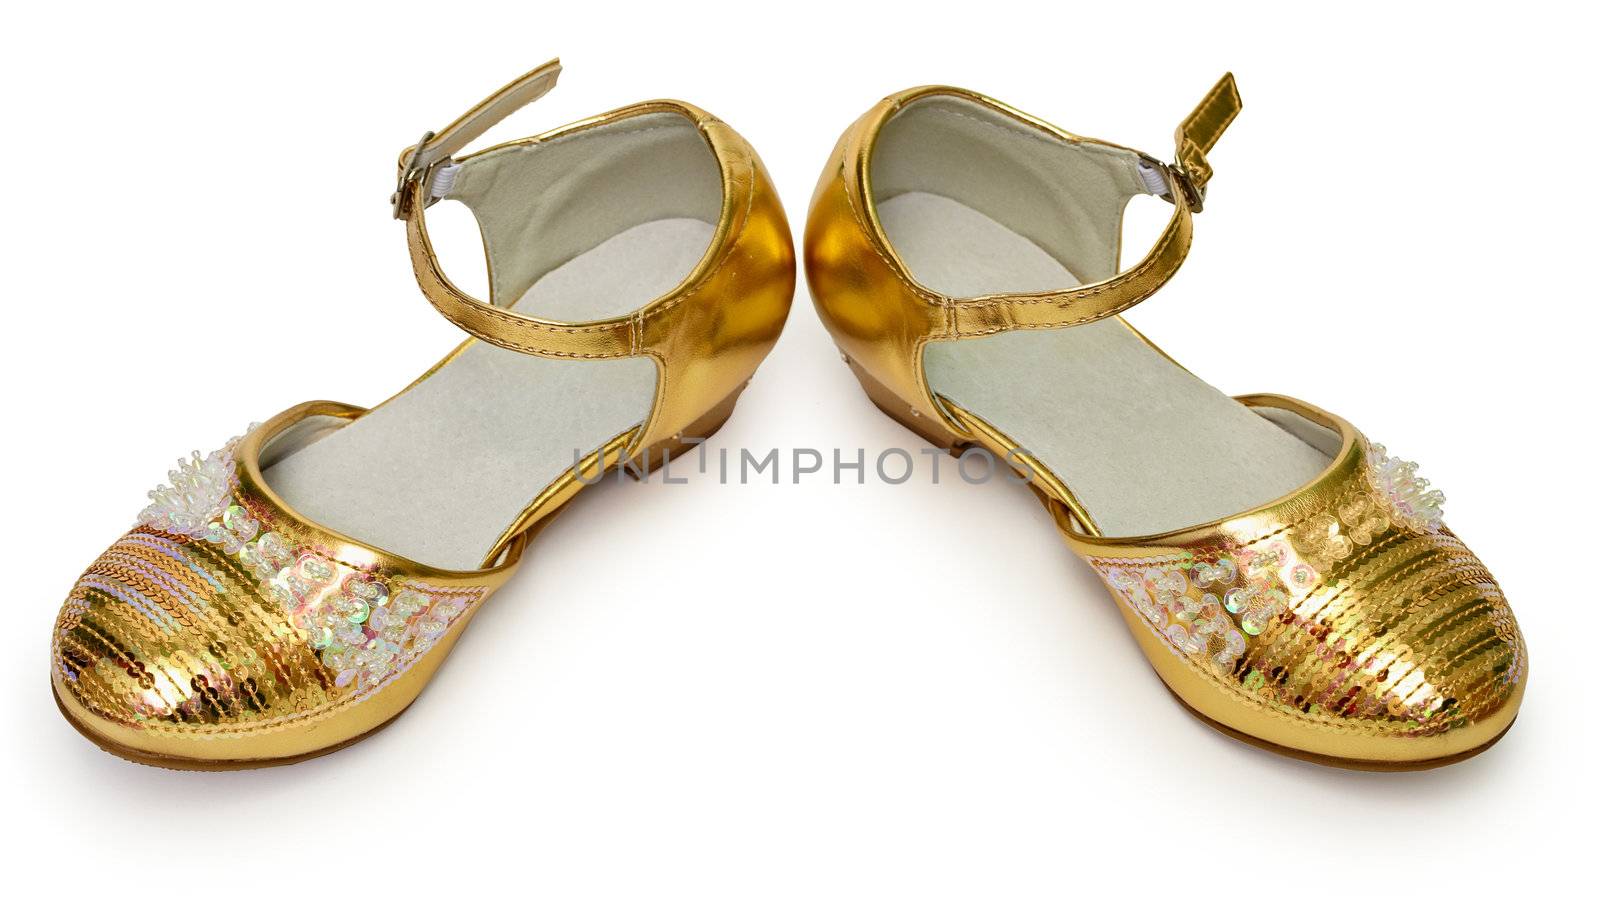 Elegant golden shoes for girls isolated on white background